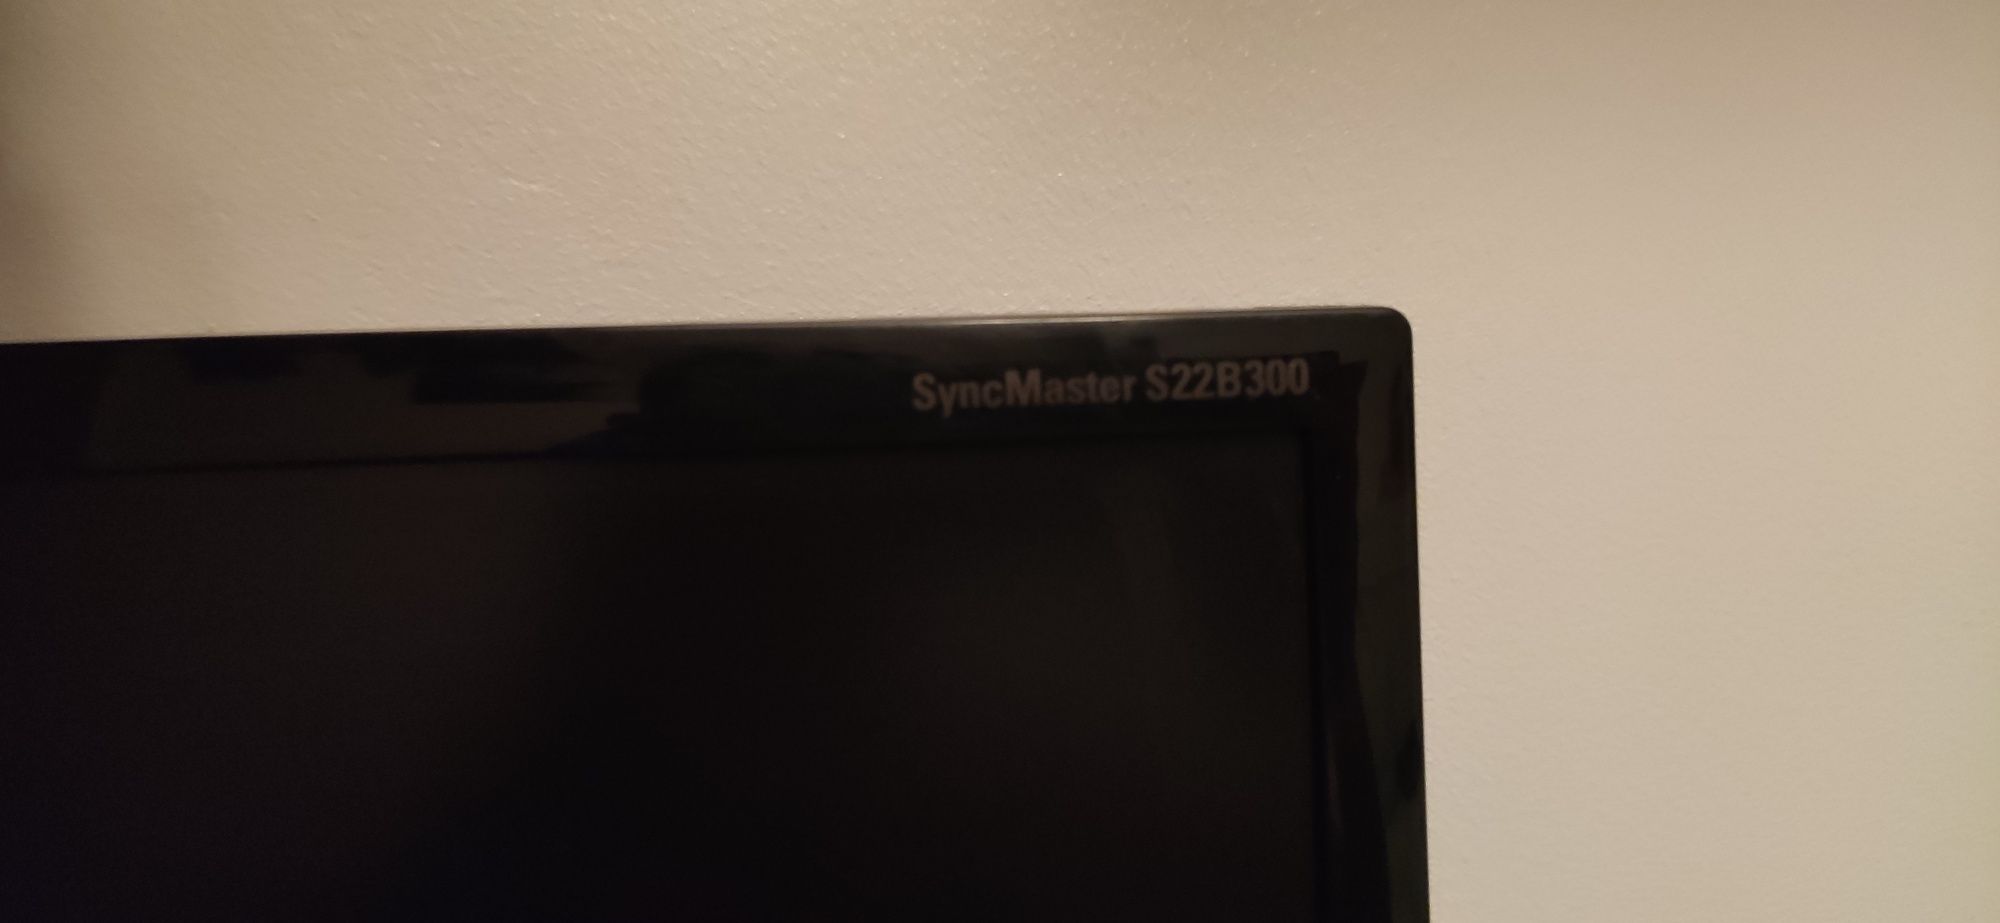 Monitor LCD 21,5pol - Samsung S22B300 (LED - Widescreen) - Preto